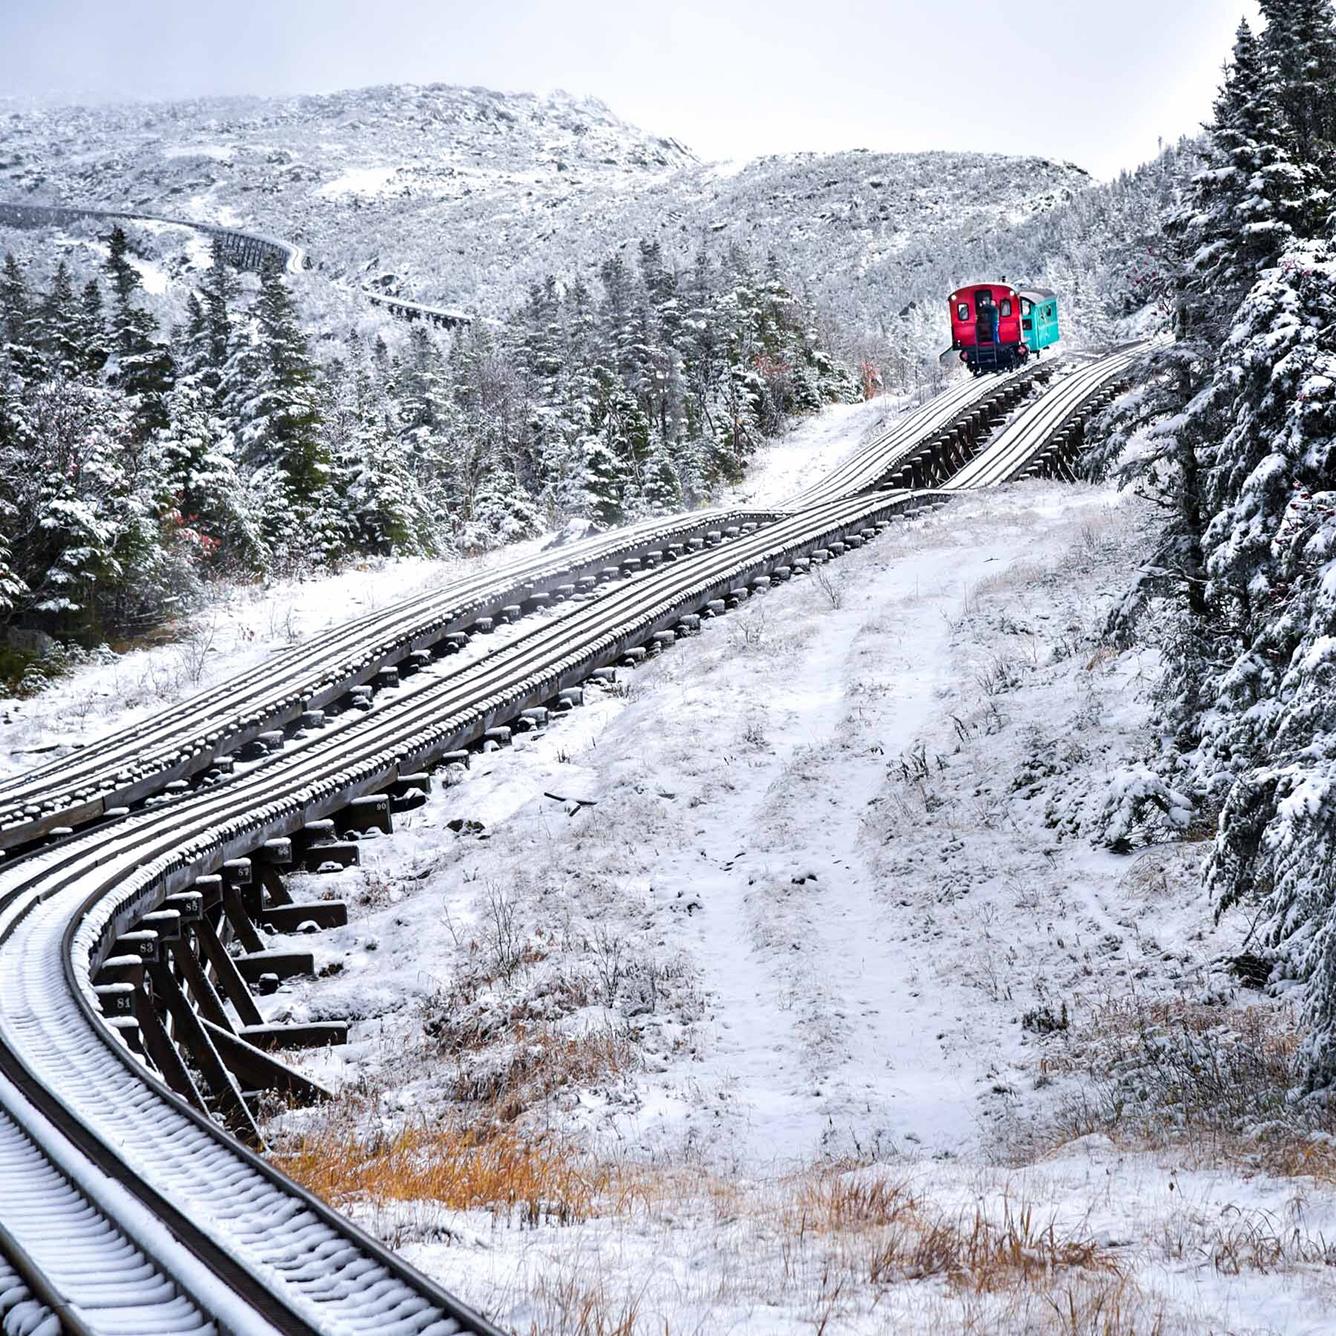 7. Mount Washington Cog Railway, Bretton Woods, New Hampshire